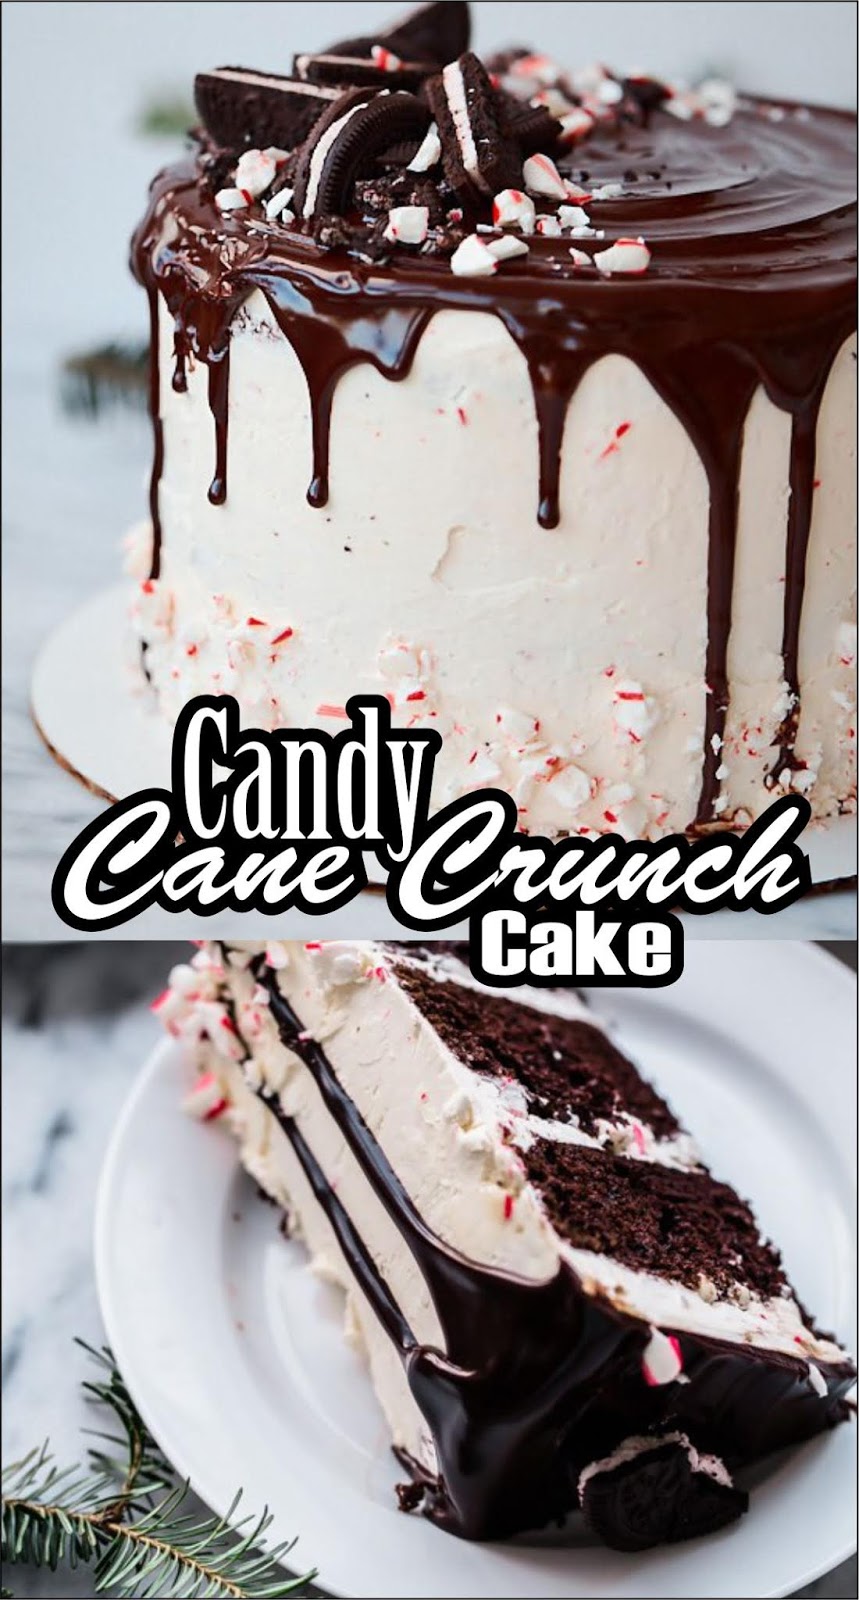 Candy Cane Crunch Cake #Christmas #Cake - angrygeorgian